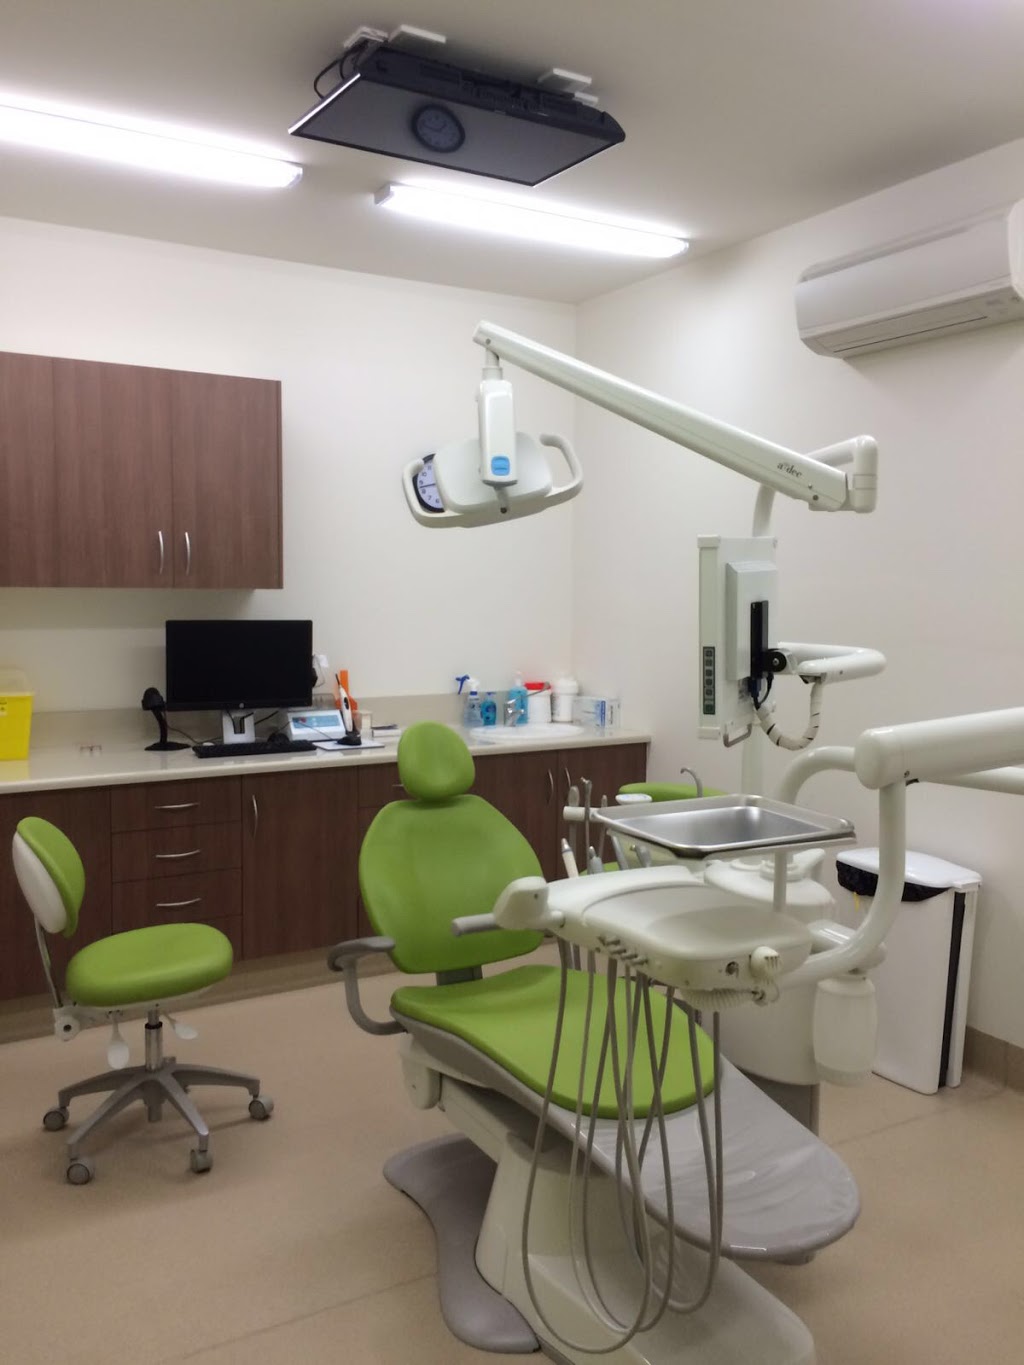 Moama Dental Clinic | dentist | 37B Meninya St, Moama NSW 2731, Australia | 0354822722 OR +61 3 5482 2722